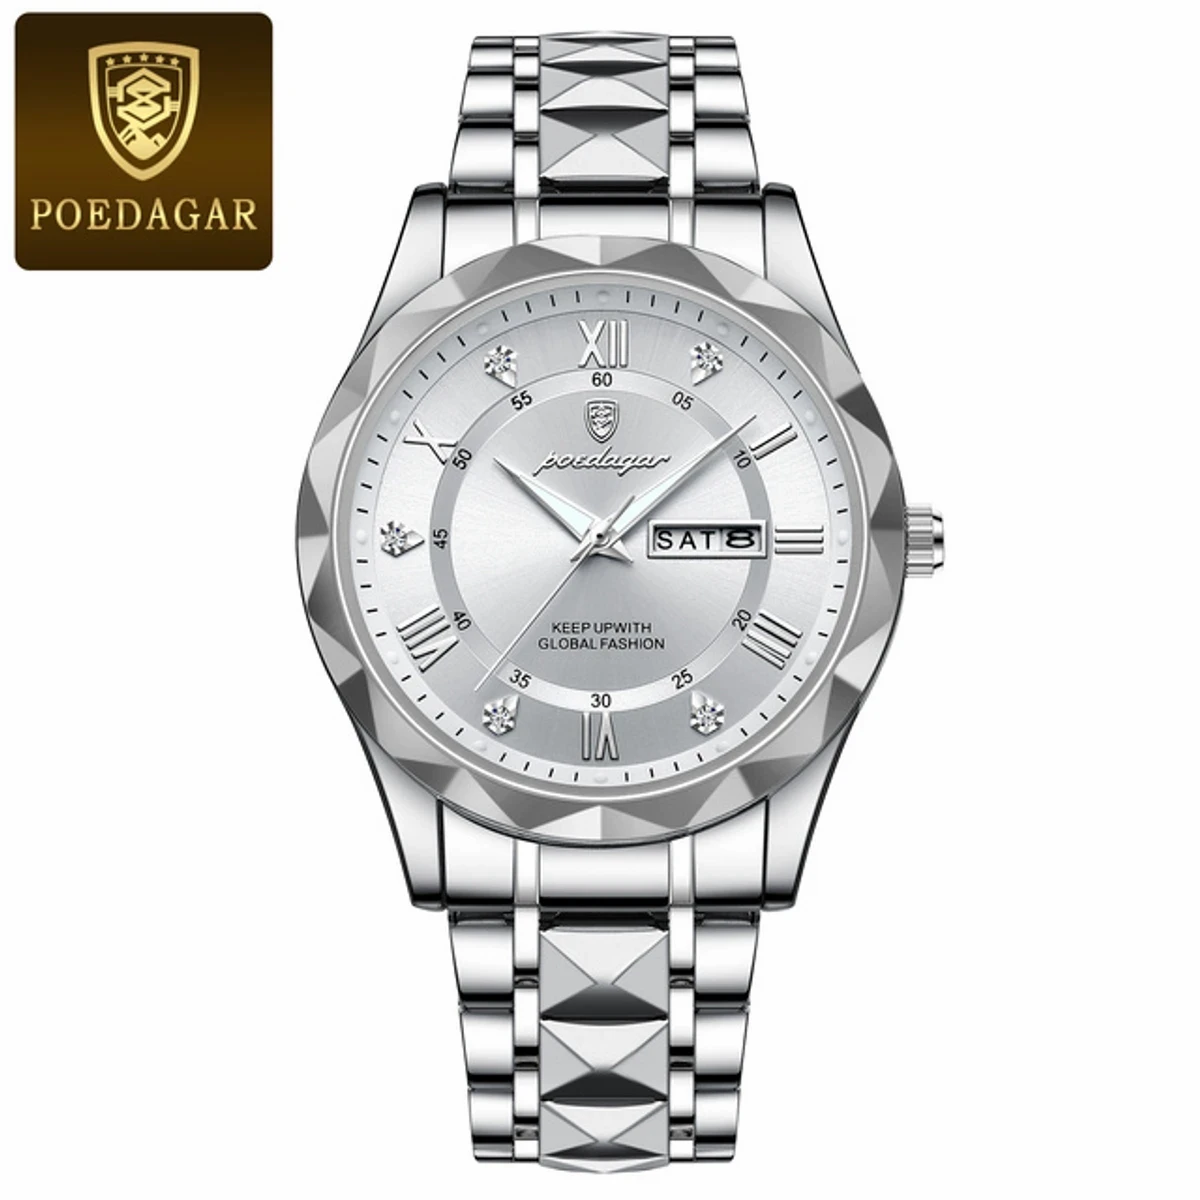 POEDAGAR Luxury Men Watches Business Top Brand Man Wristwatch Waterproof Luminous Date Week Quartz Men's Watch High Quality+Box - FULL SILVER COOLER POYDAGOR